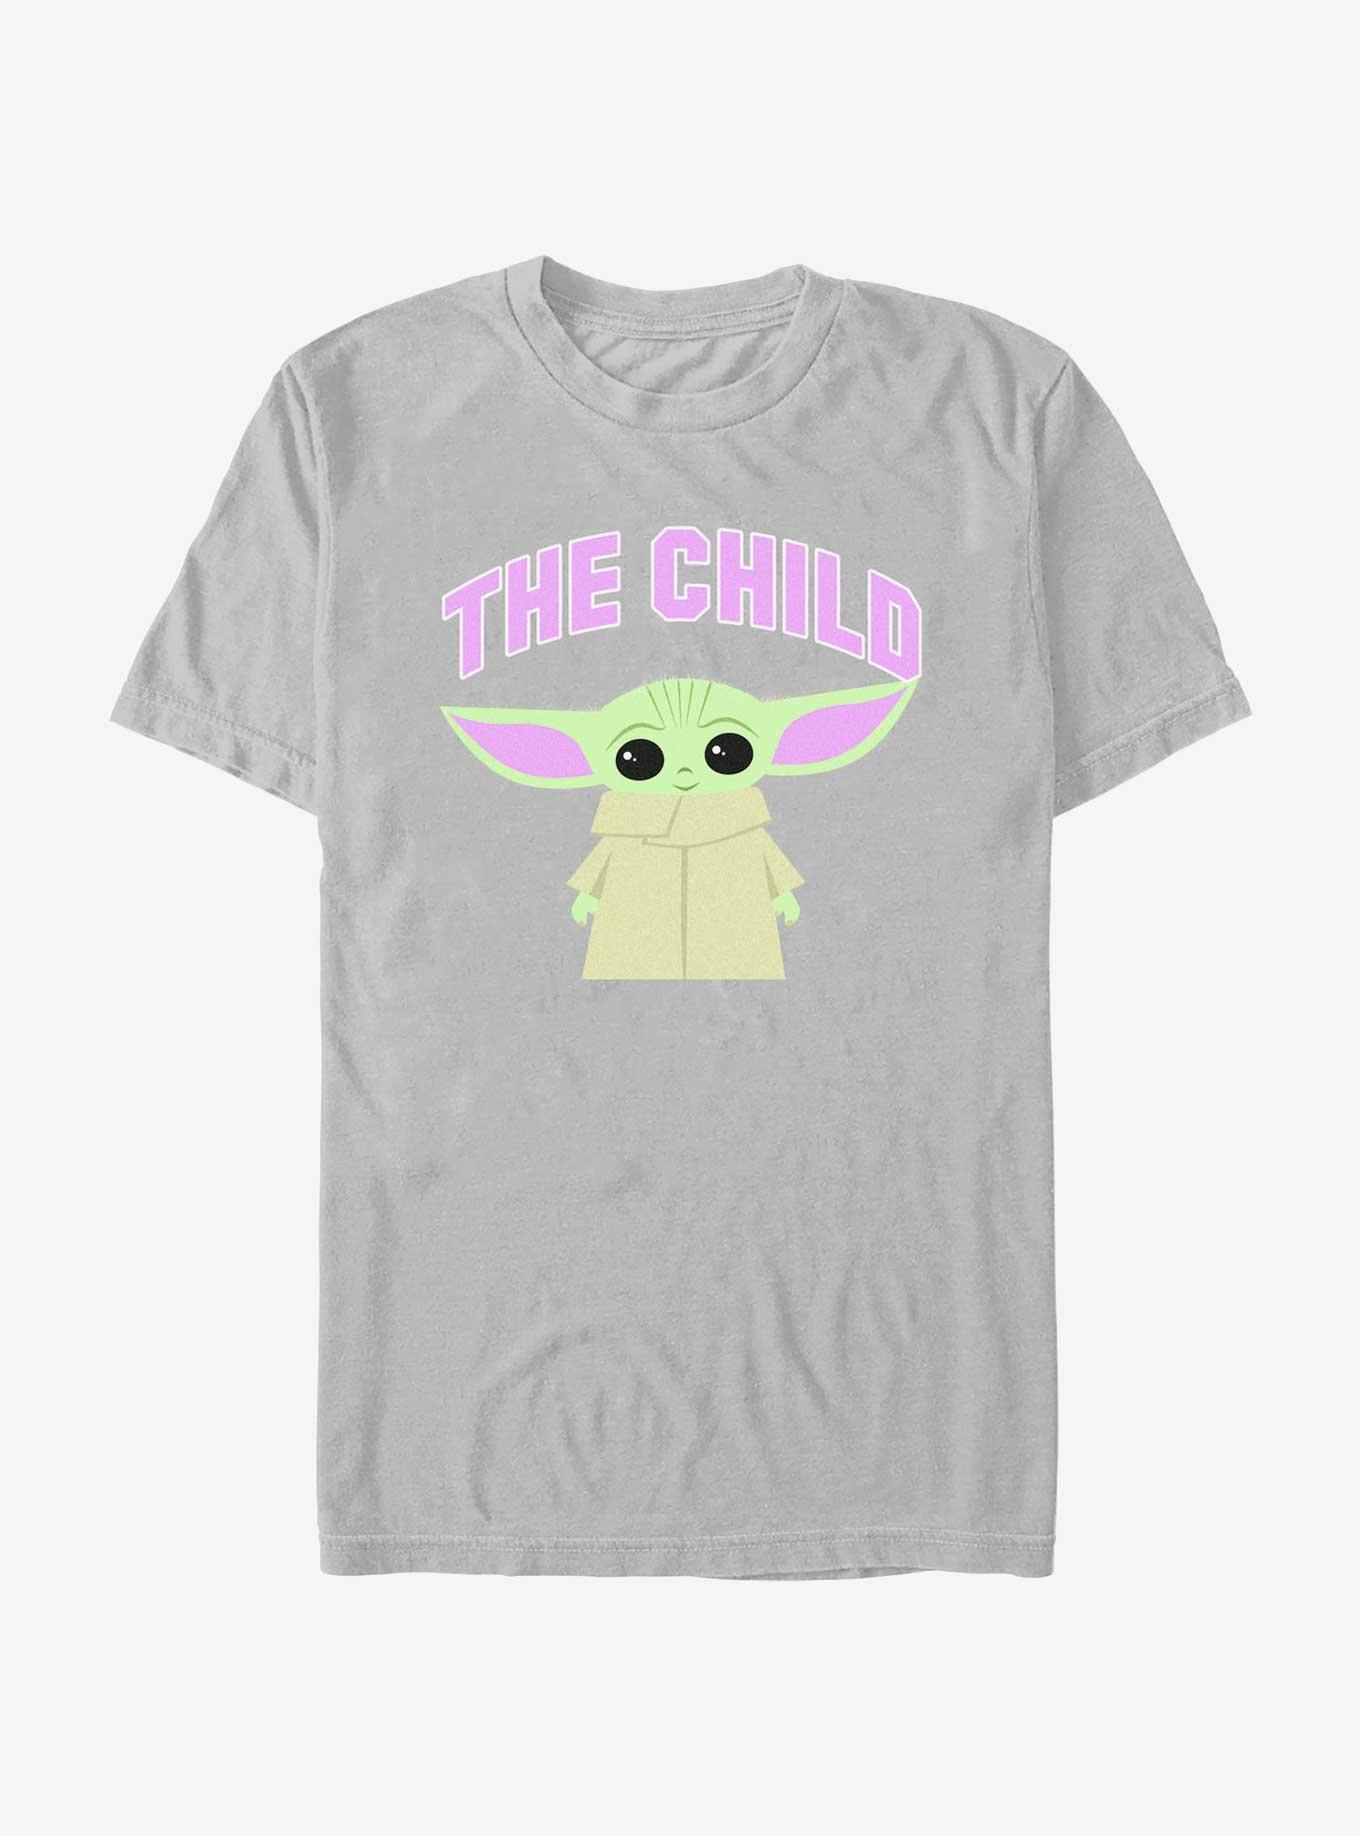 Star Wars The Mandalorian Cutie Child T-Shirt, SILVER, hi-res